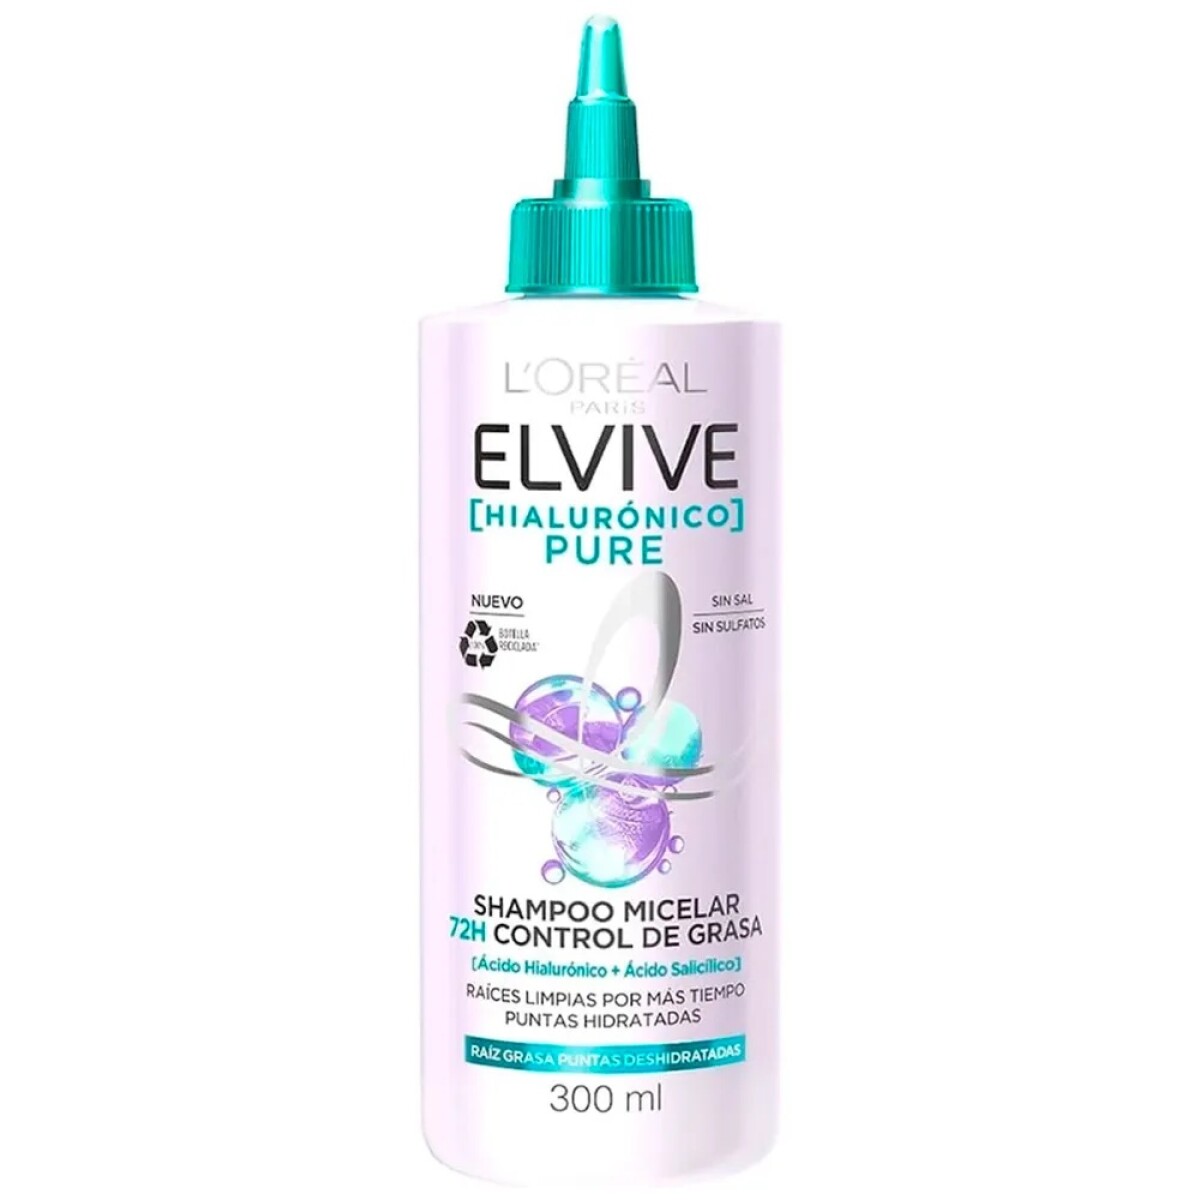 Elvive Hialuronic Pure Micellar Shampoo 300ml 